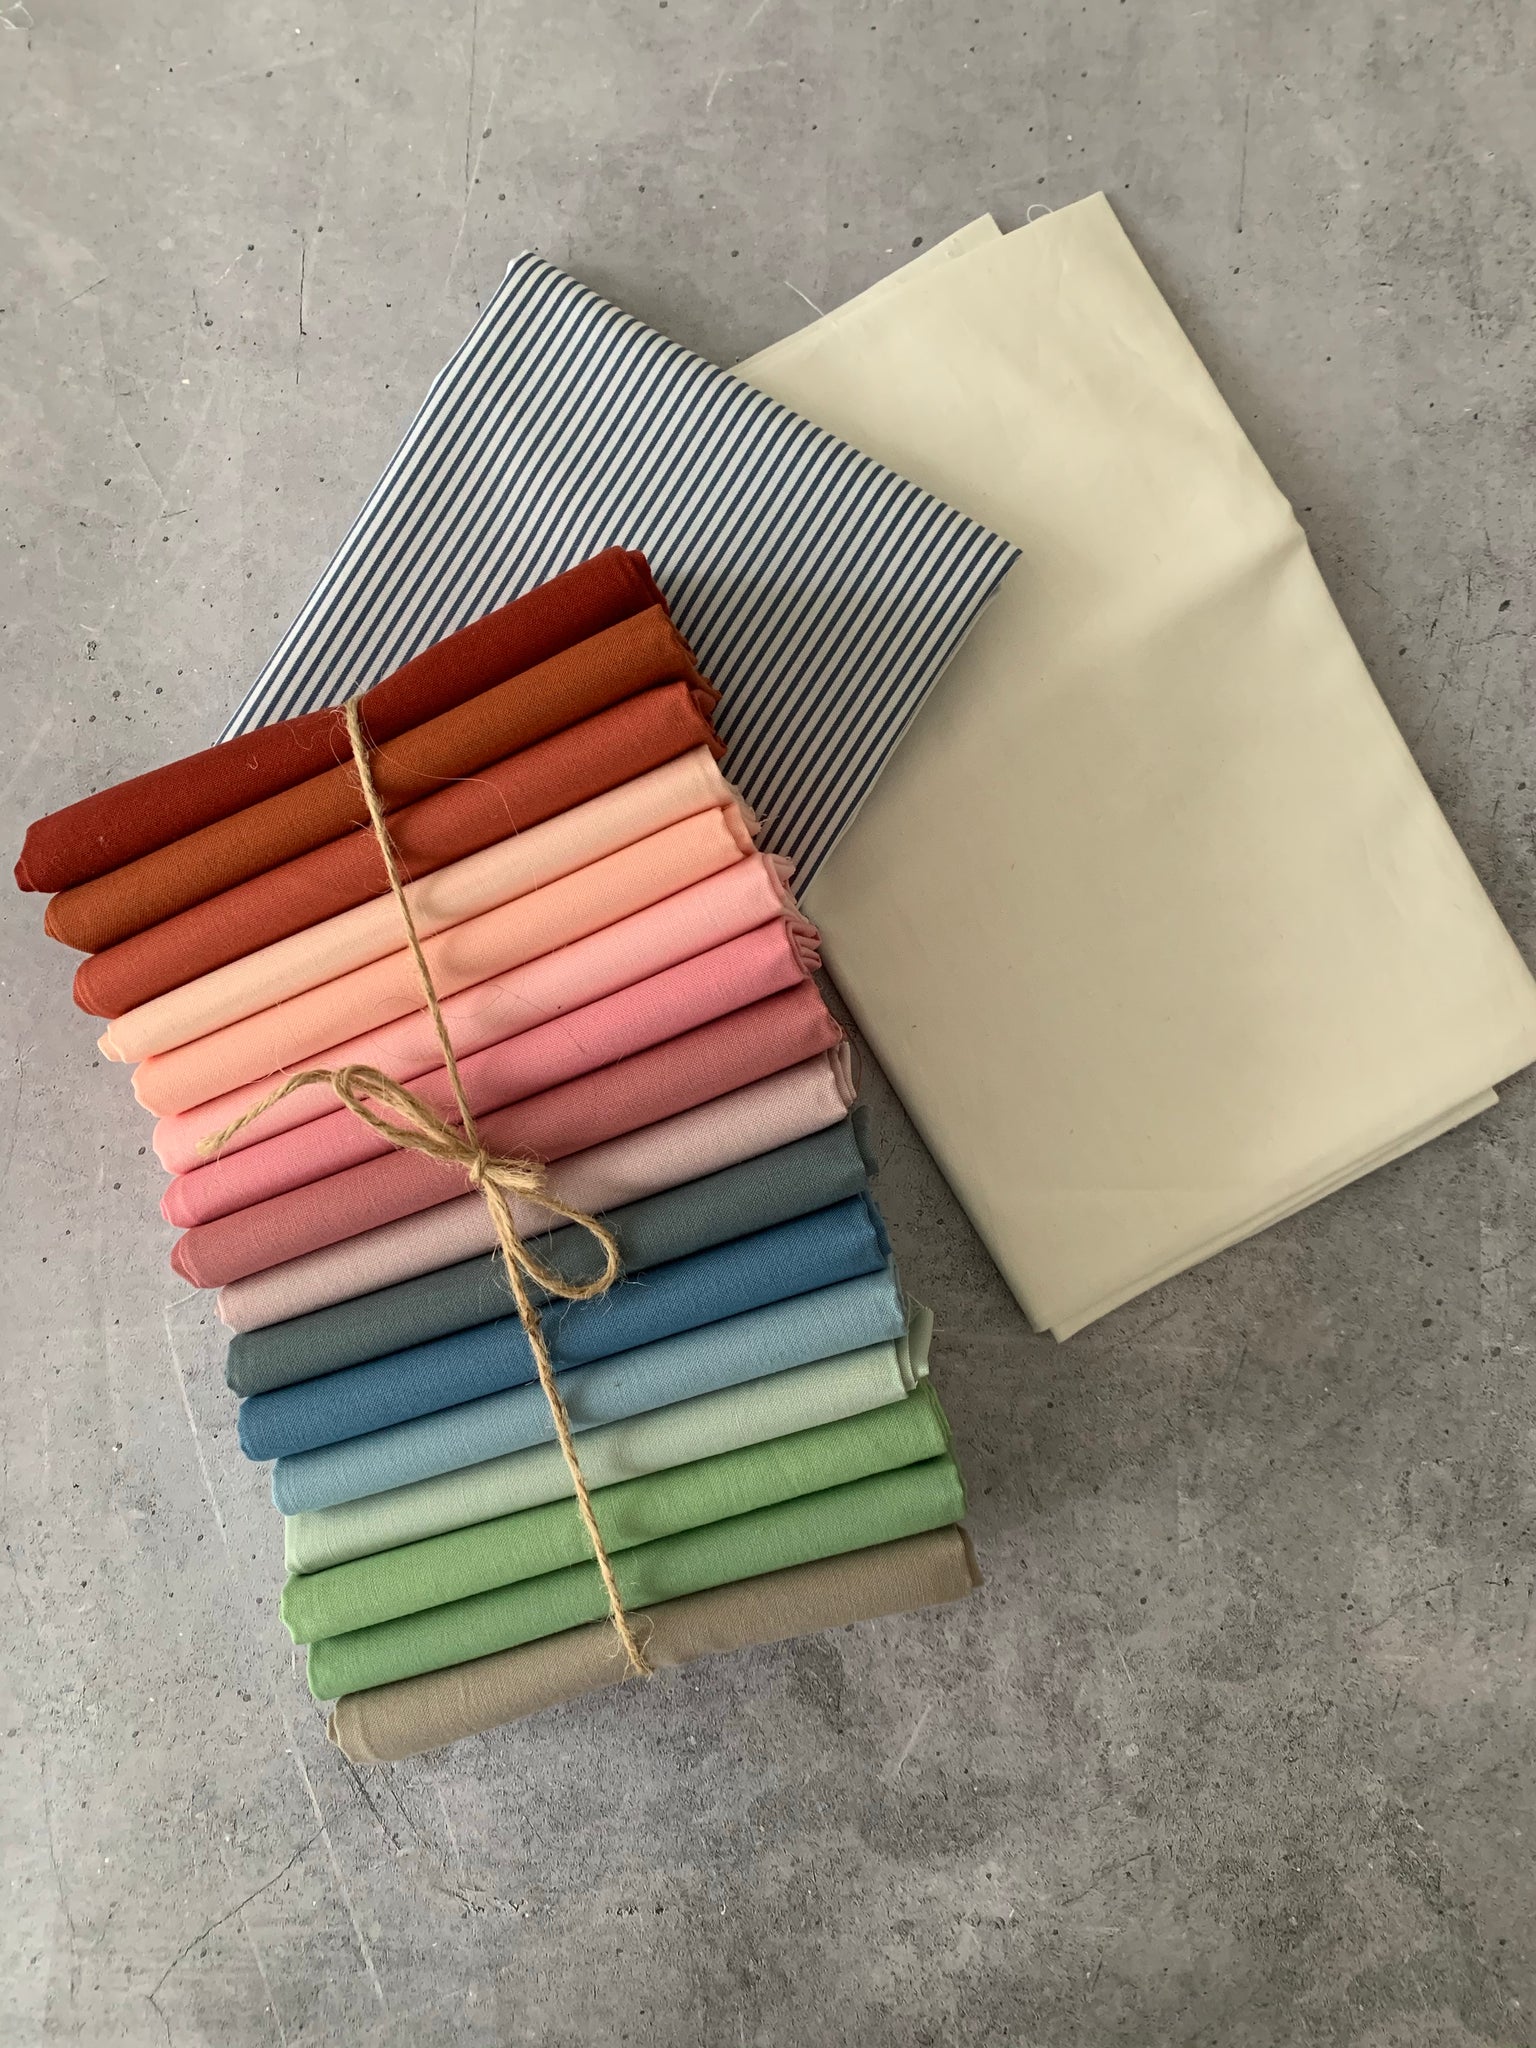 Suzy quilts 'Shine Quilt' fabric bundle kit - throw size  (Bella, and Robert Kaufman Kitchen window wovens)